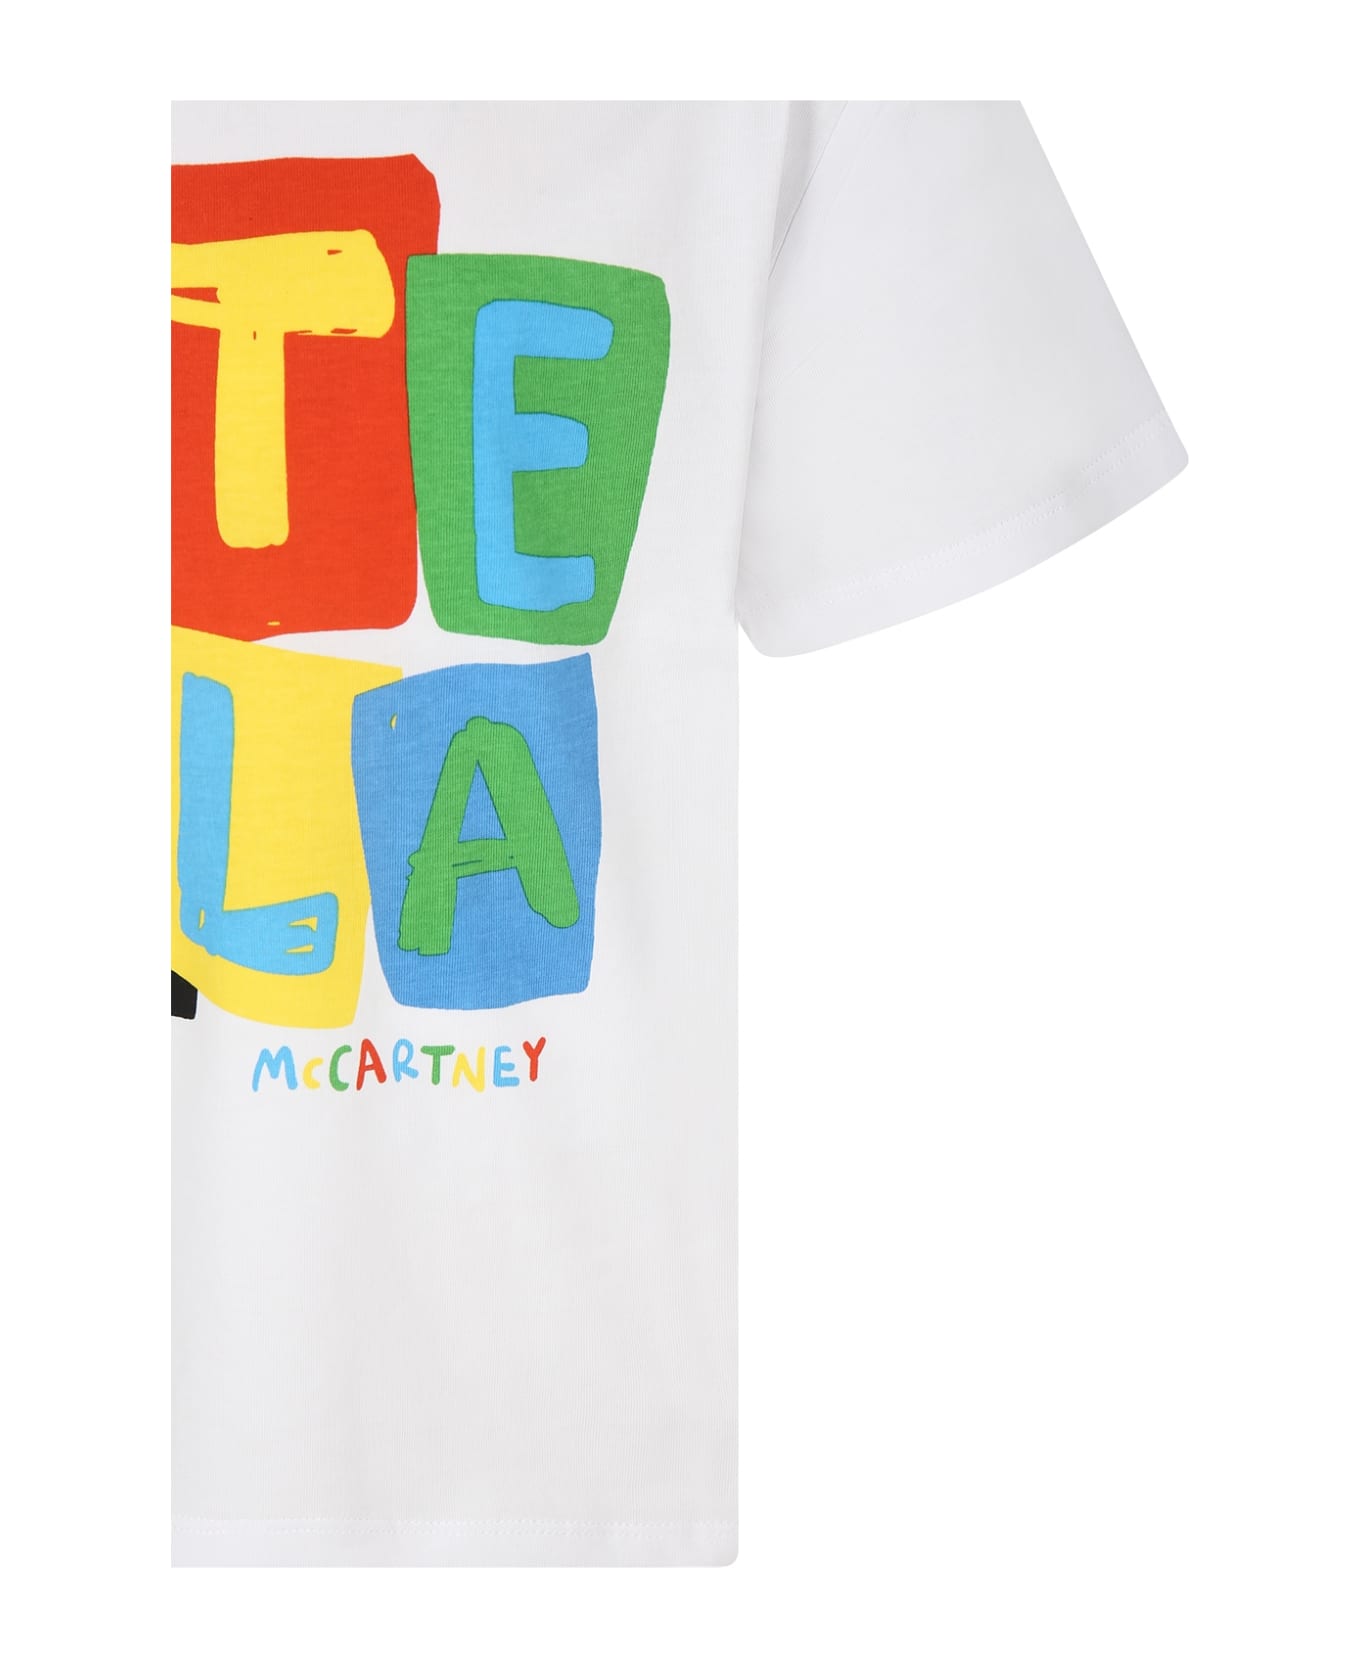 Stella McCartney Kids White T-shirt For Boy With Logo Print - White